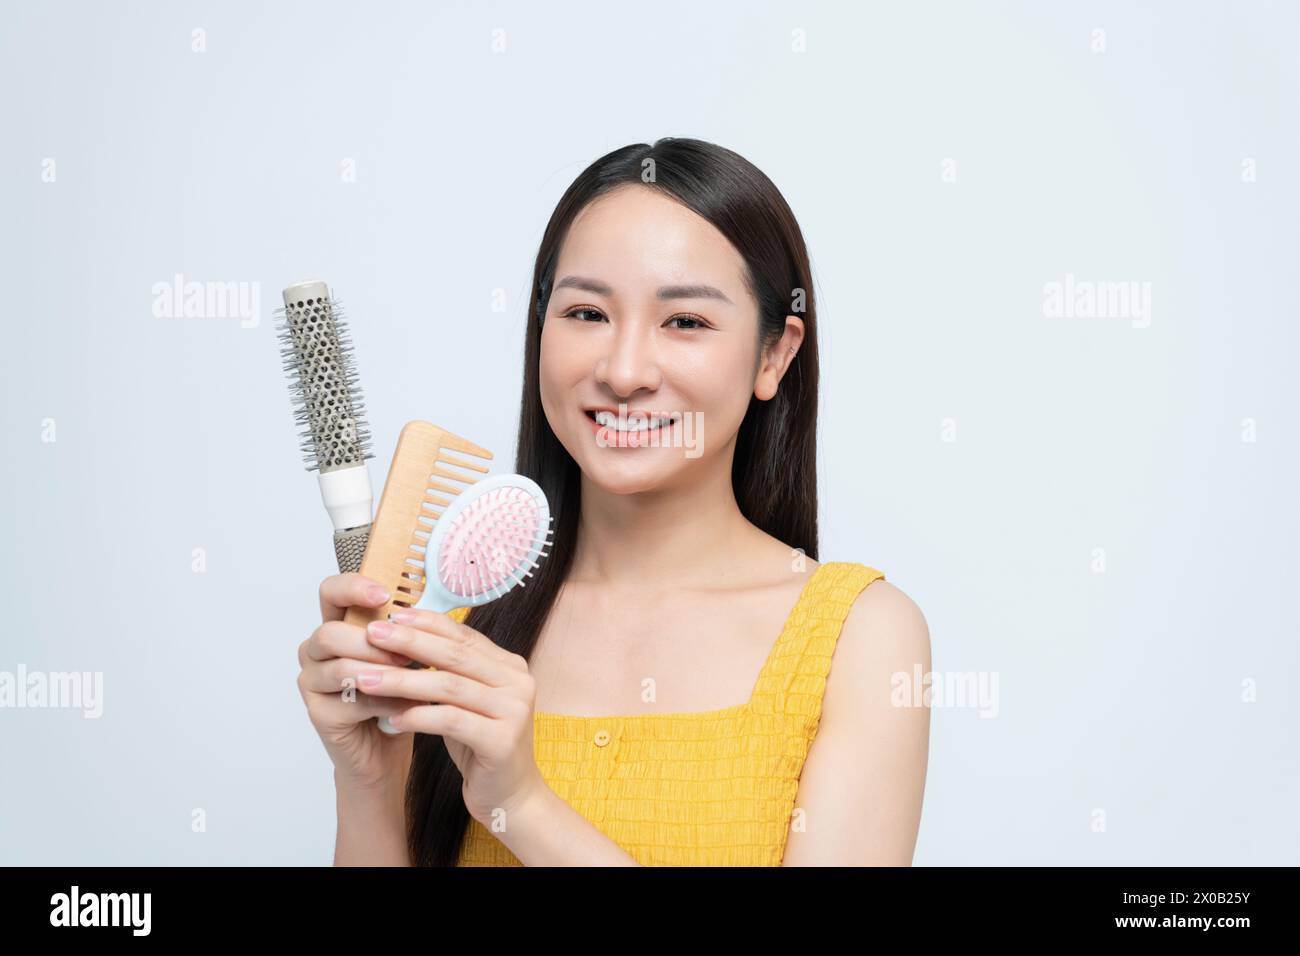 Woman holding hairbrush near face Stock Photo